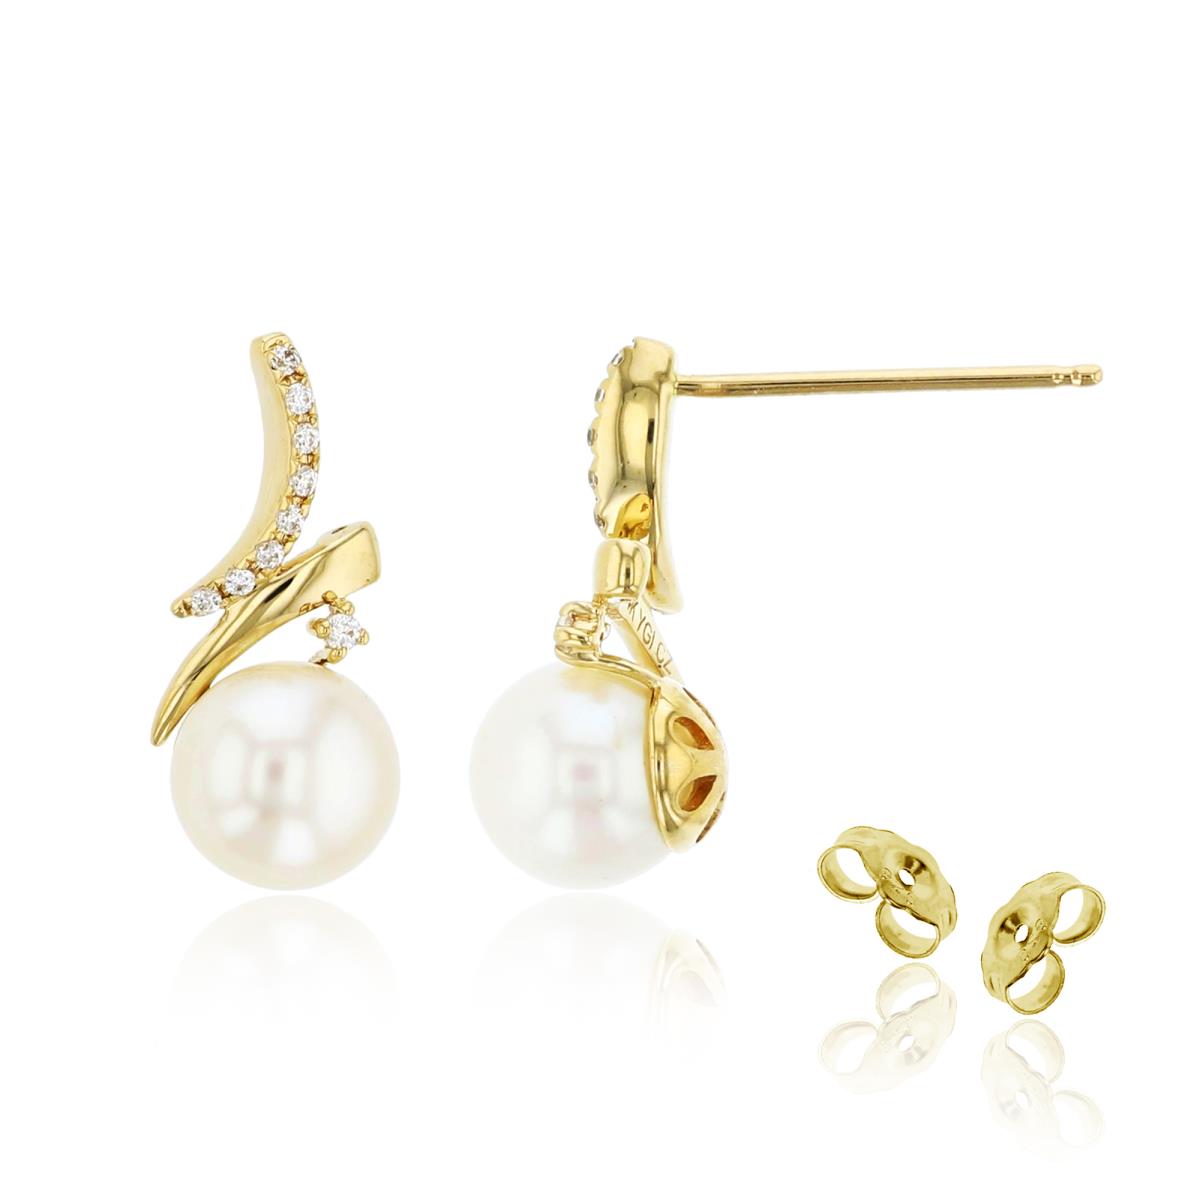 10K Yellow Gold 0.04 CTTW Rnd Diamonds & 6mm Rnd White Pearl  Earring